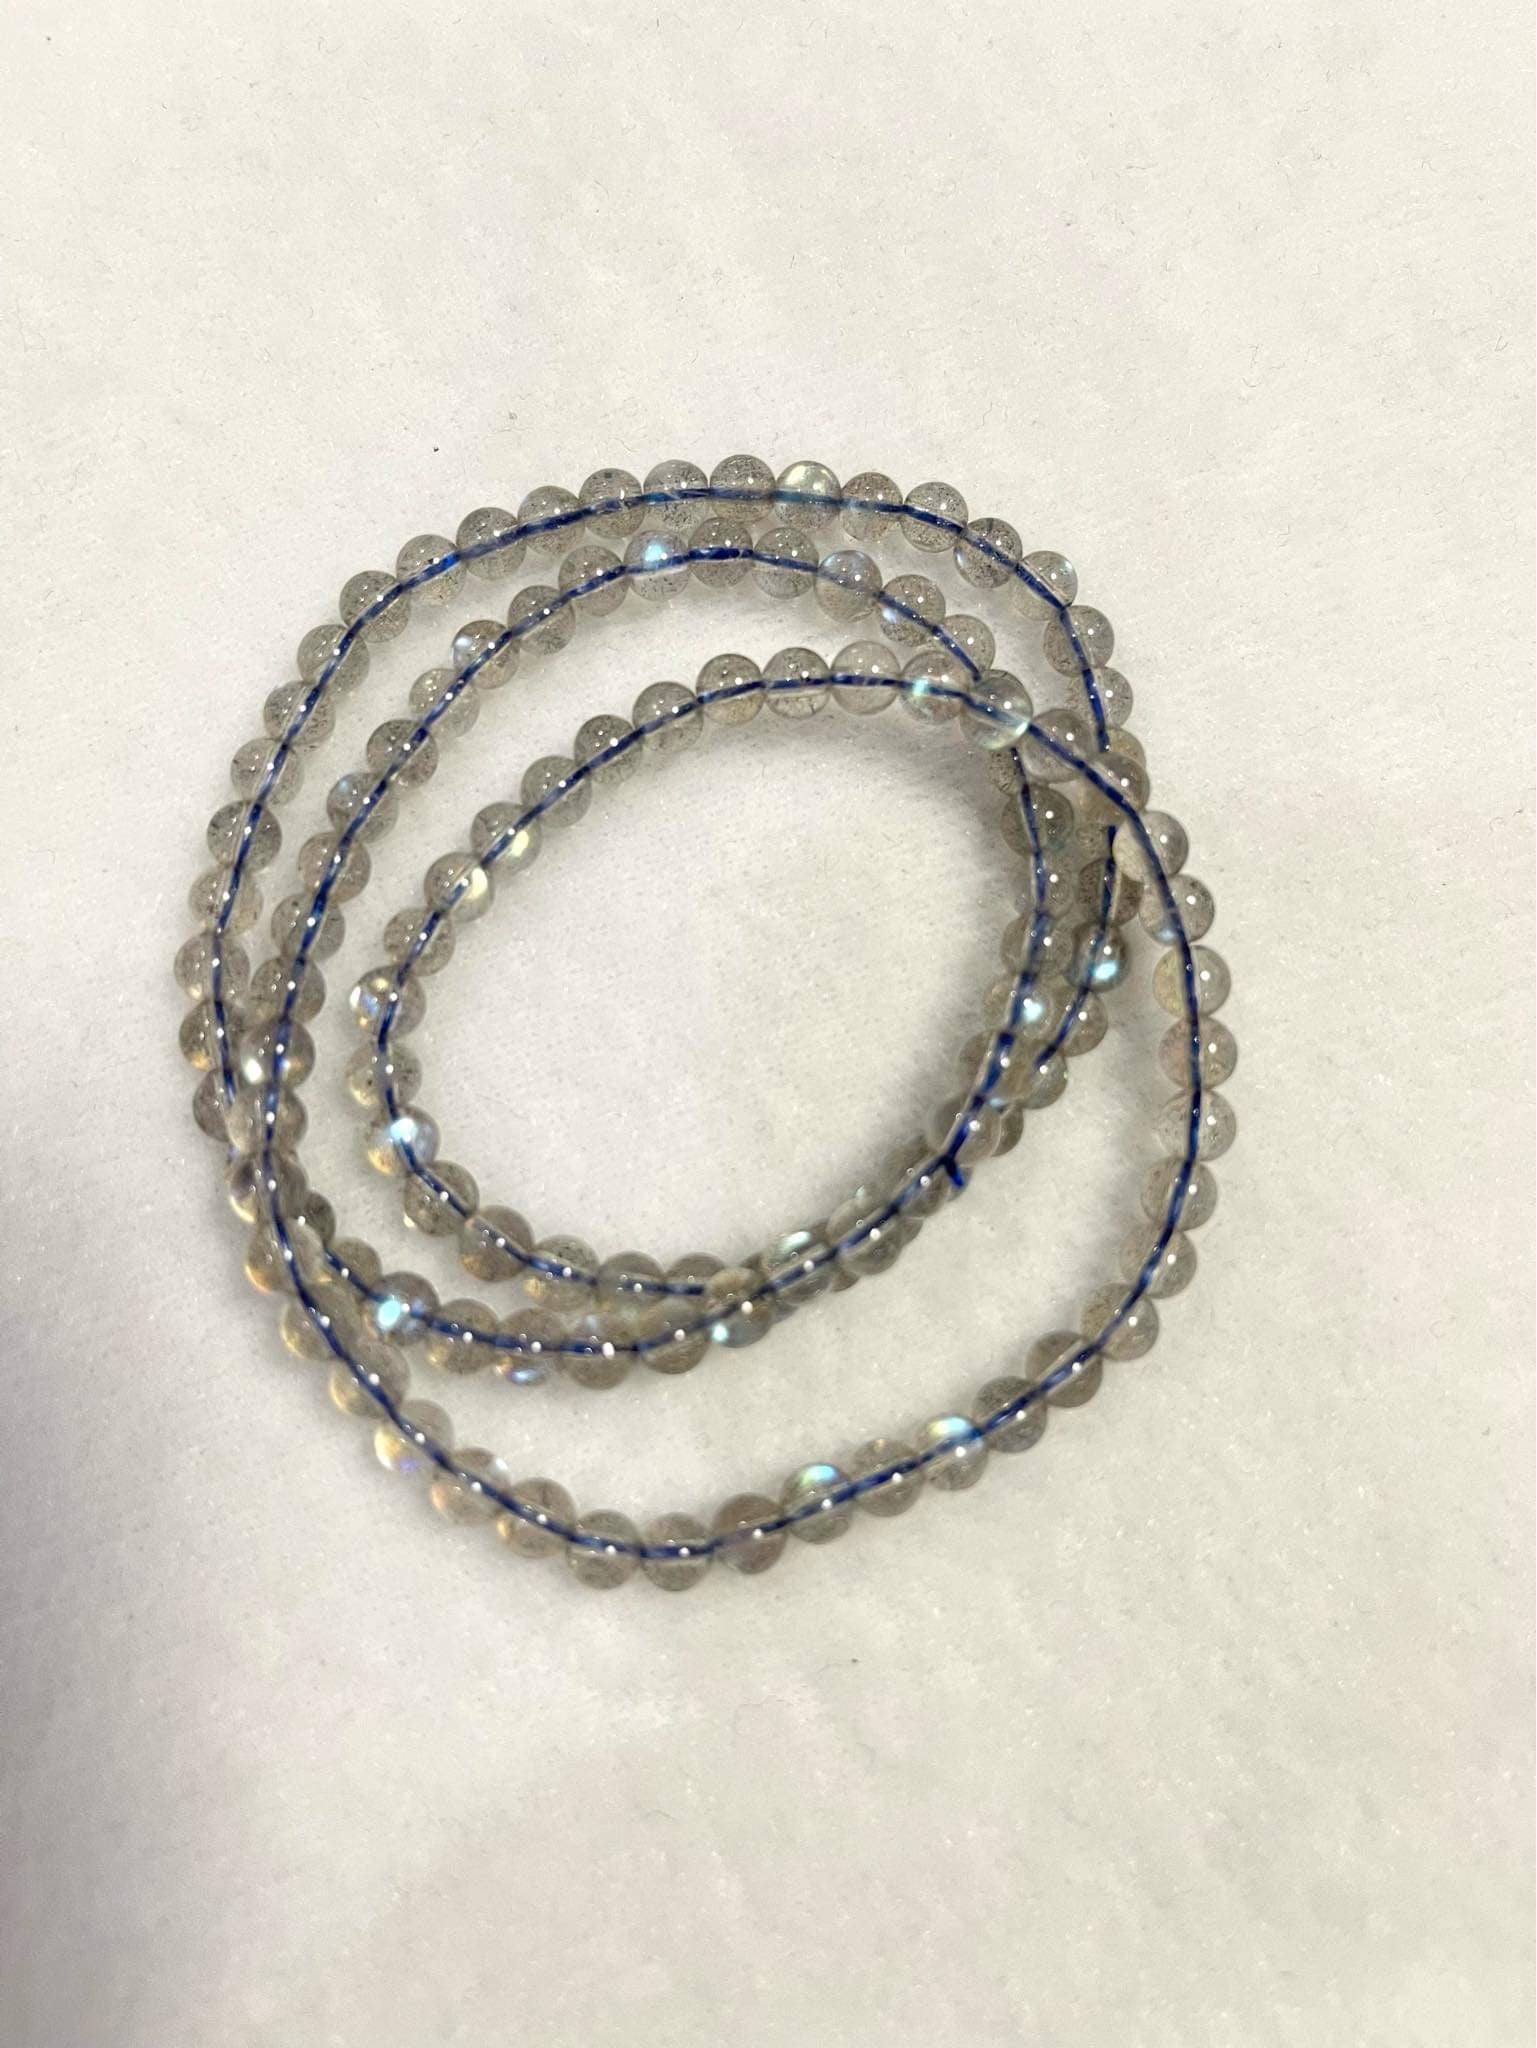 Bracelet or Necklace, moonstone 5mm beads